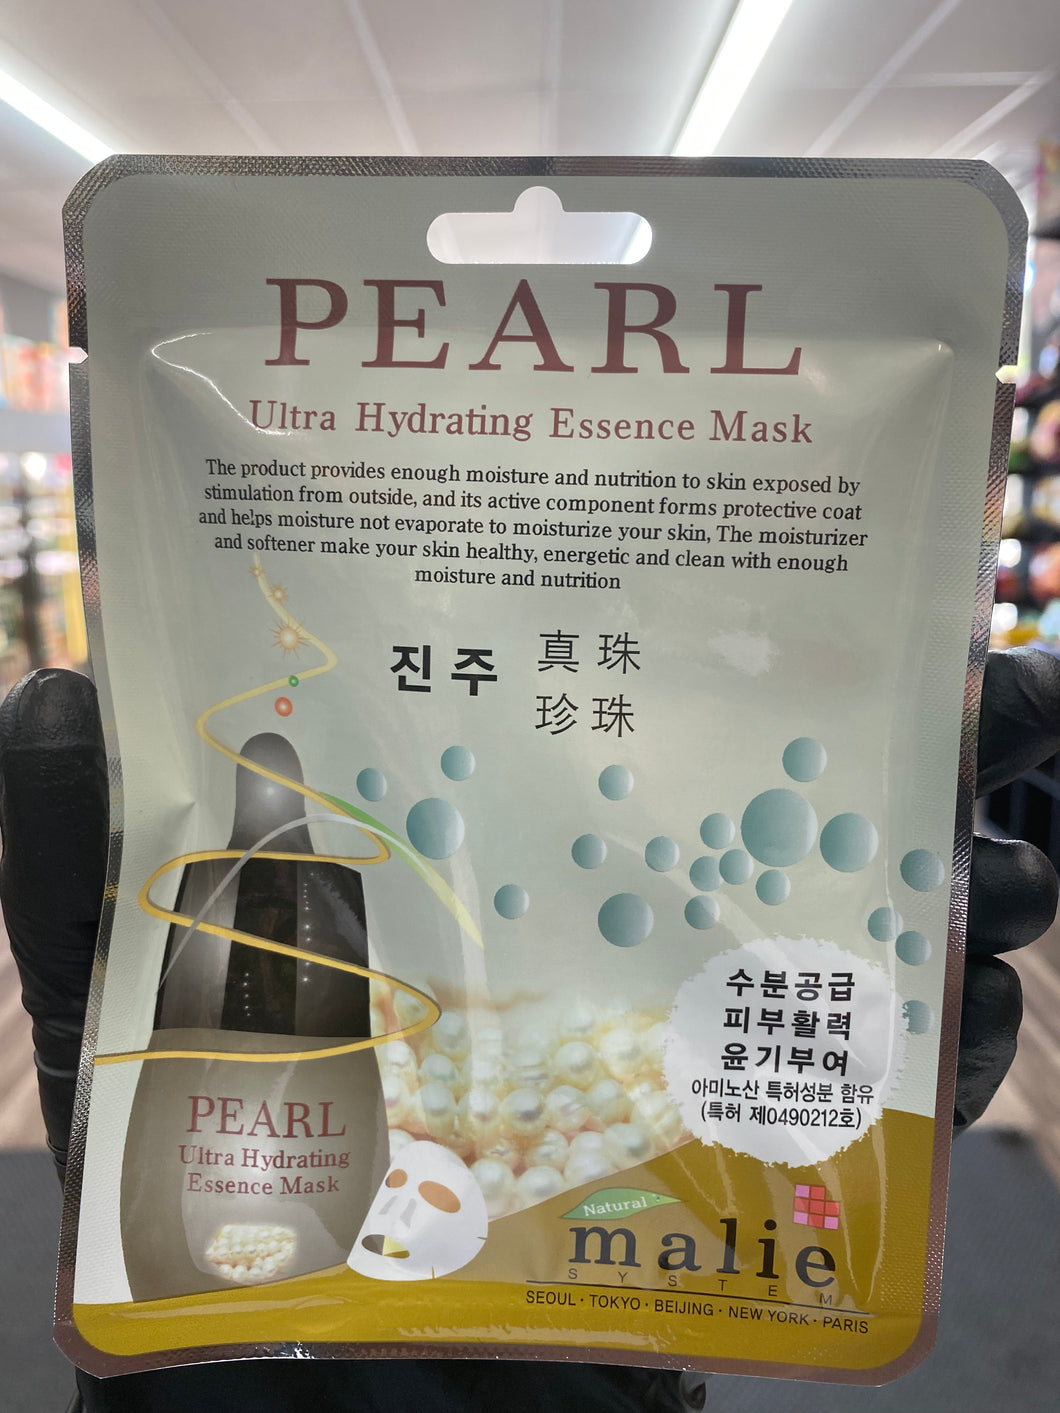 Pearl Ultra Hydrating Essence Mask (Korea)